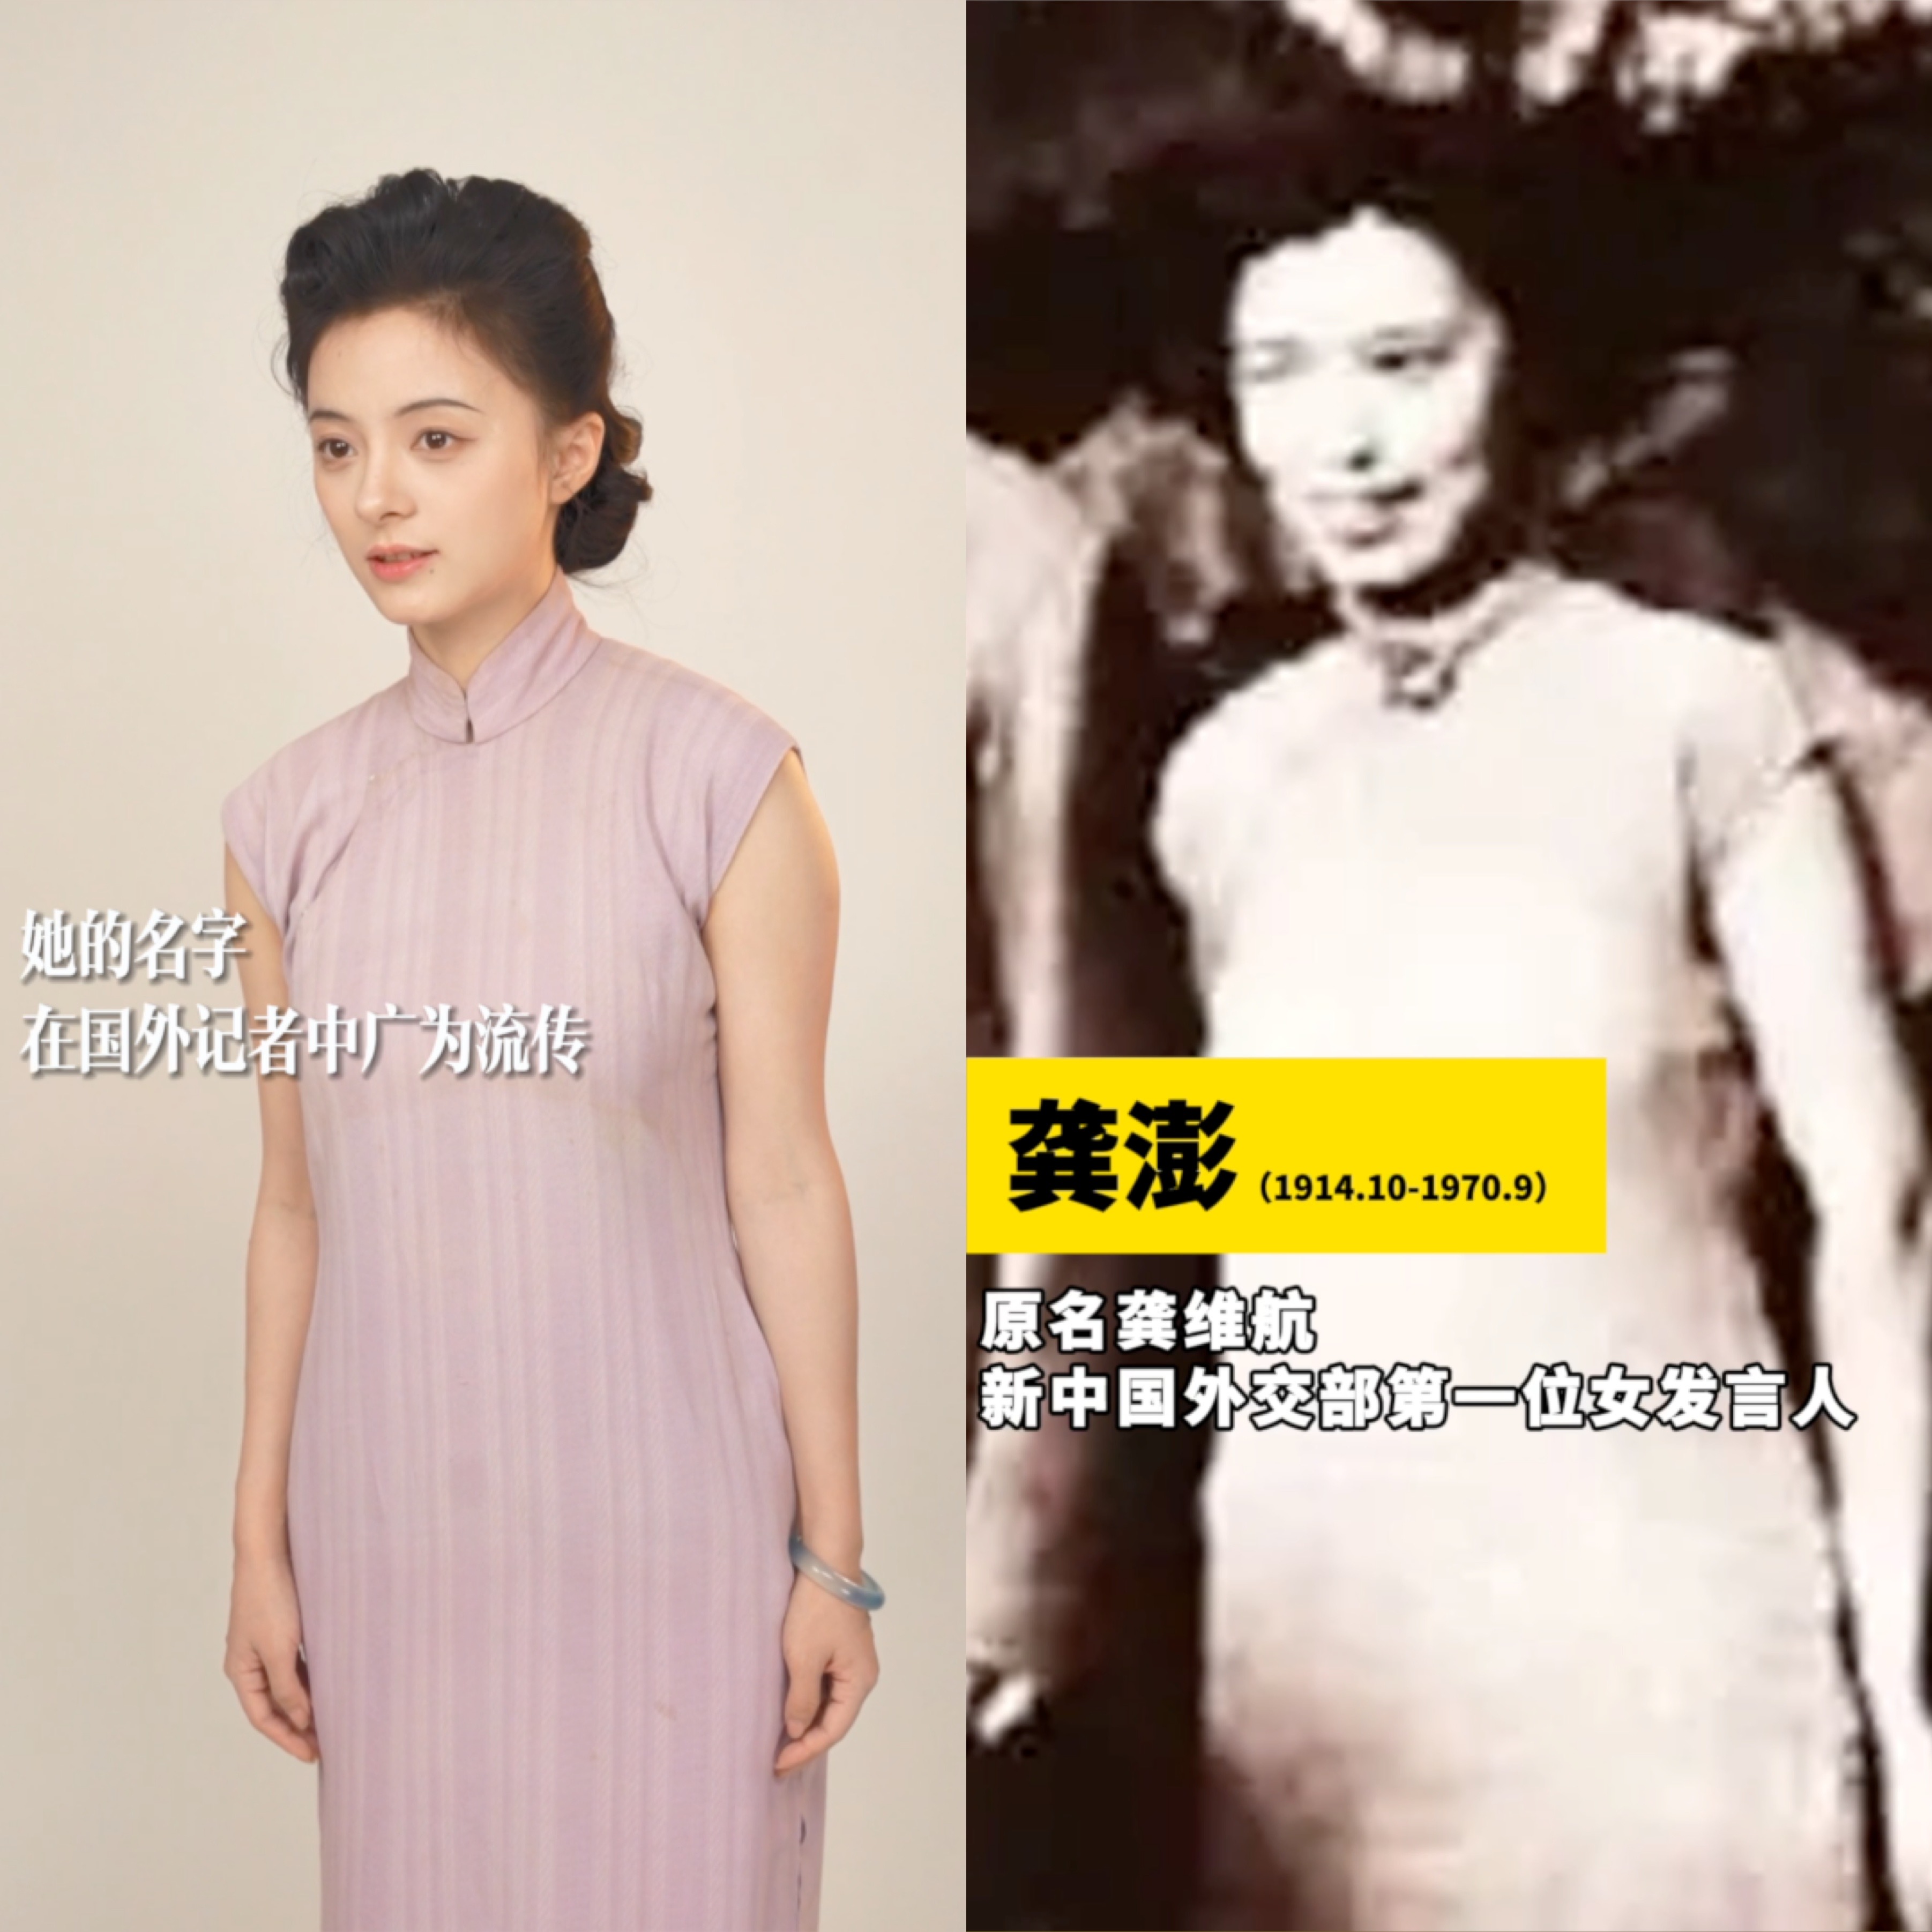 Zhang Xiyue recreates the image of female diplomat Gong Peng in a short video. /Photo provided by Zhang Xiyue